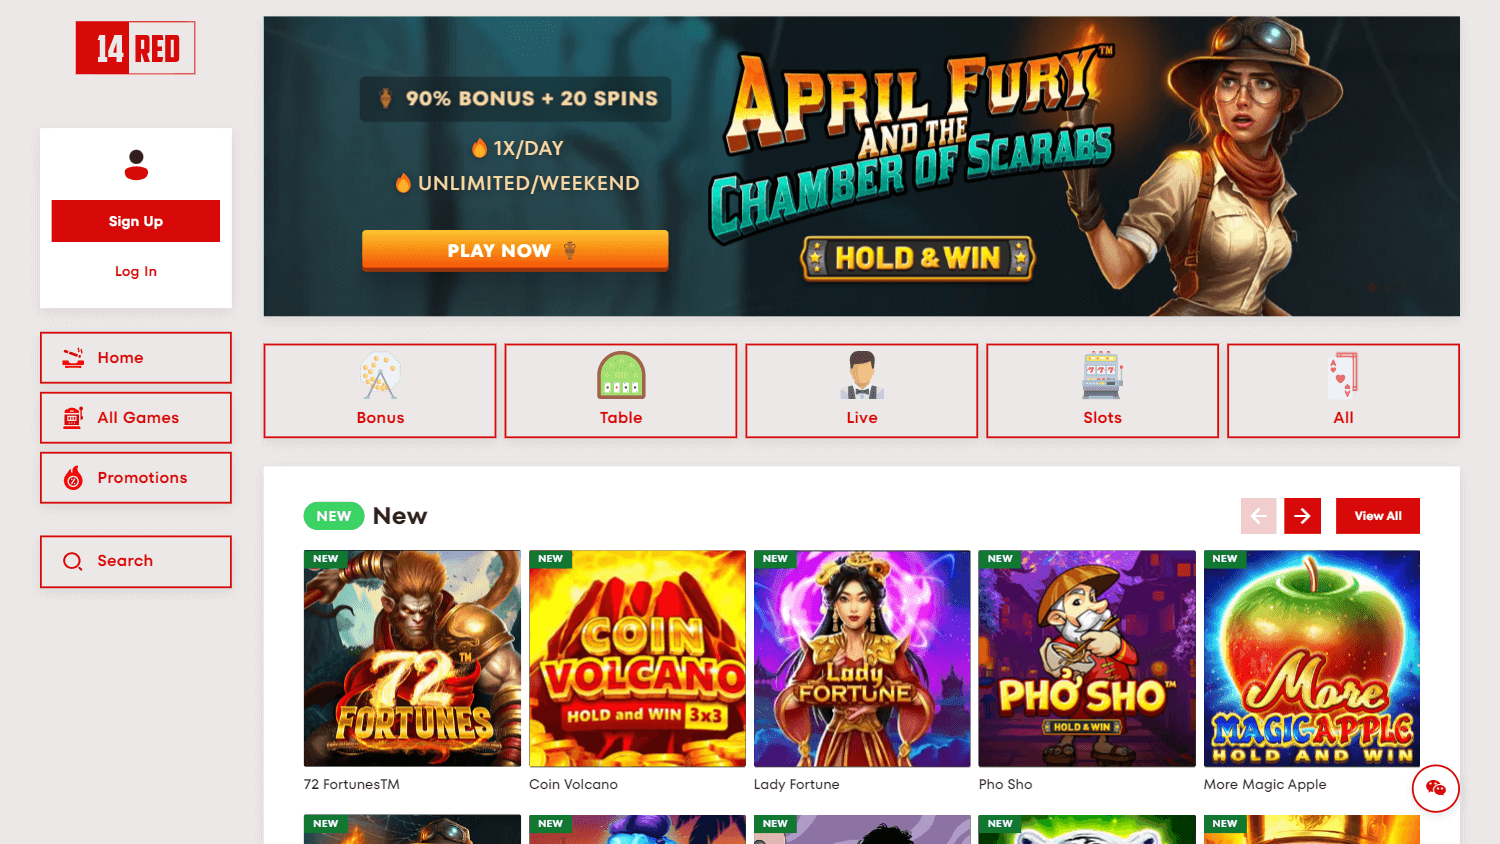 14red_casino_homepage_desktop